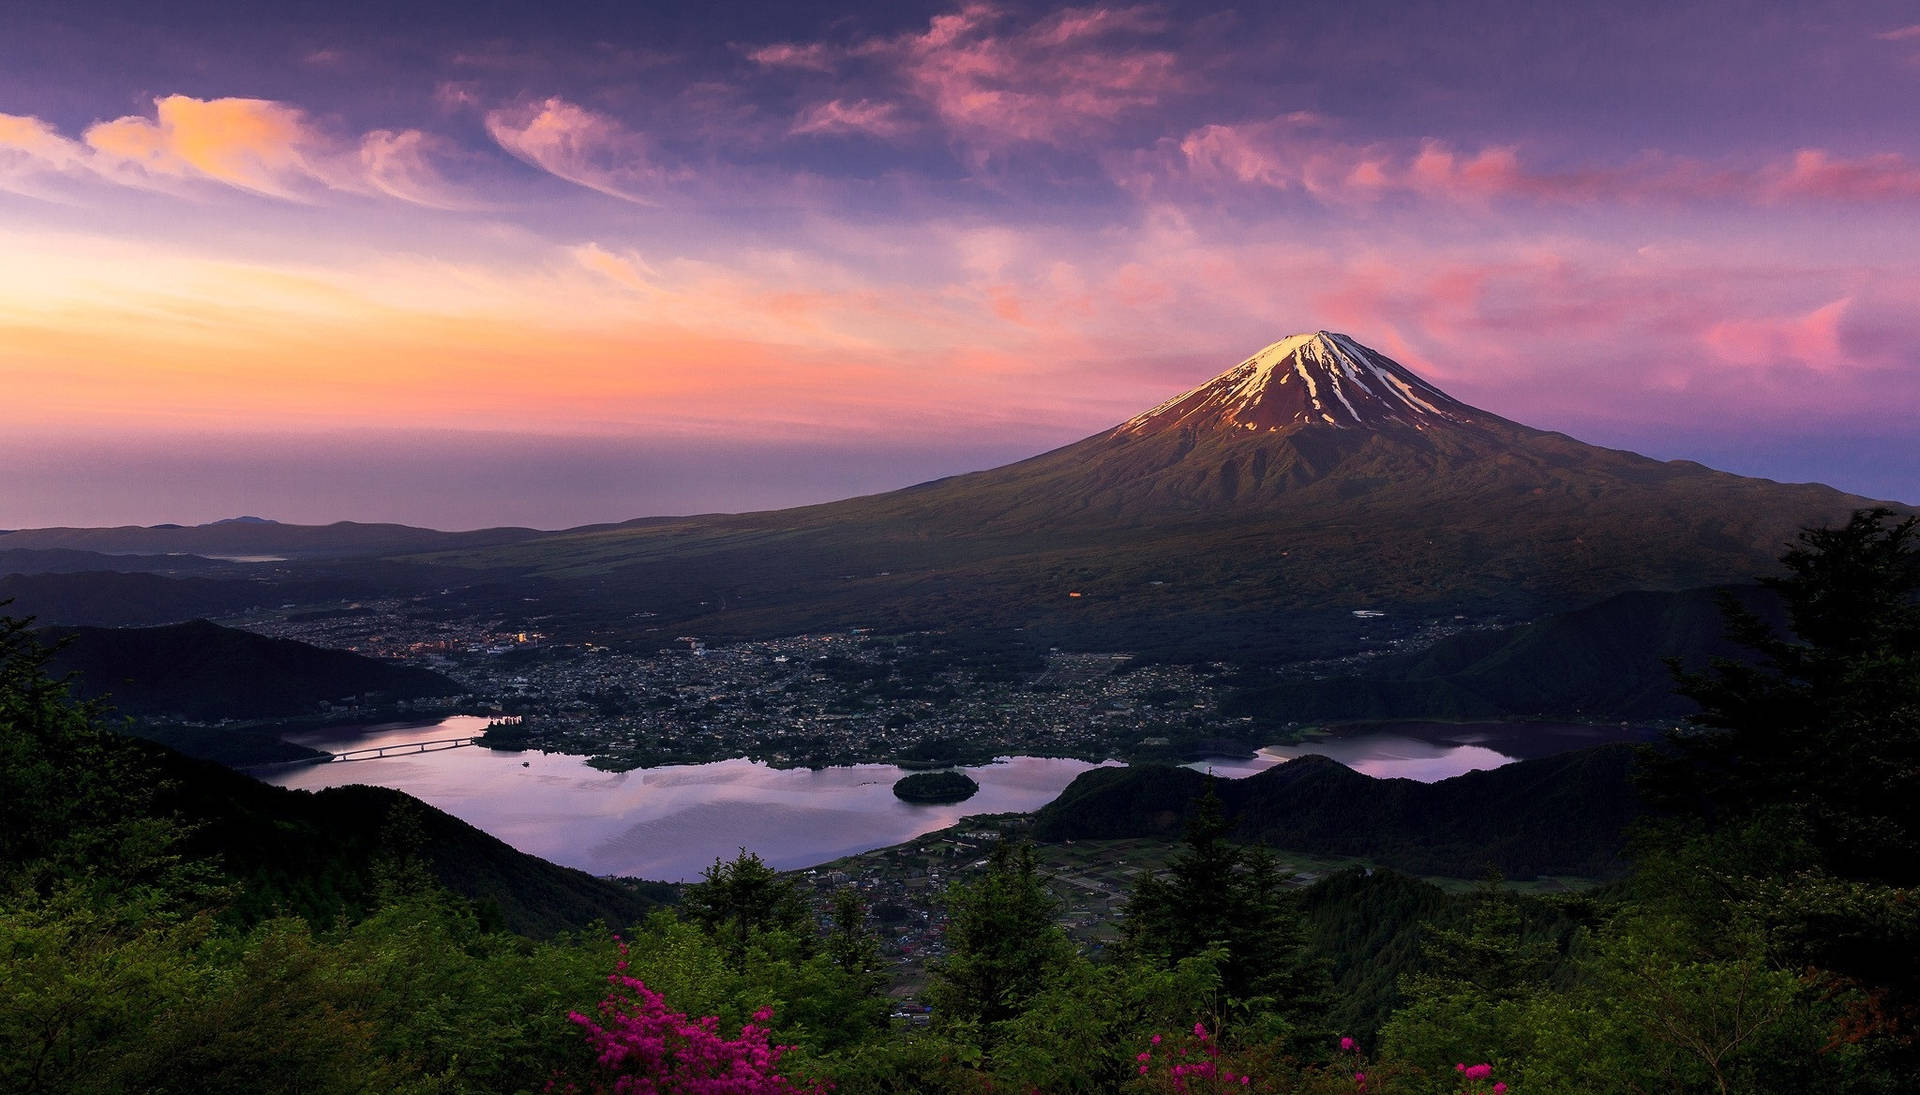 Distant Mount Fuji